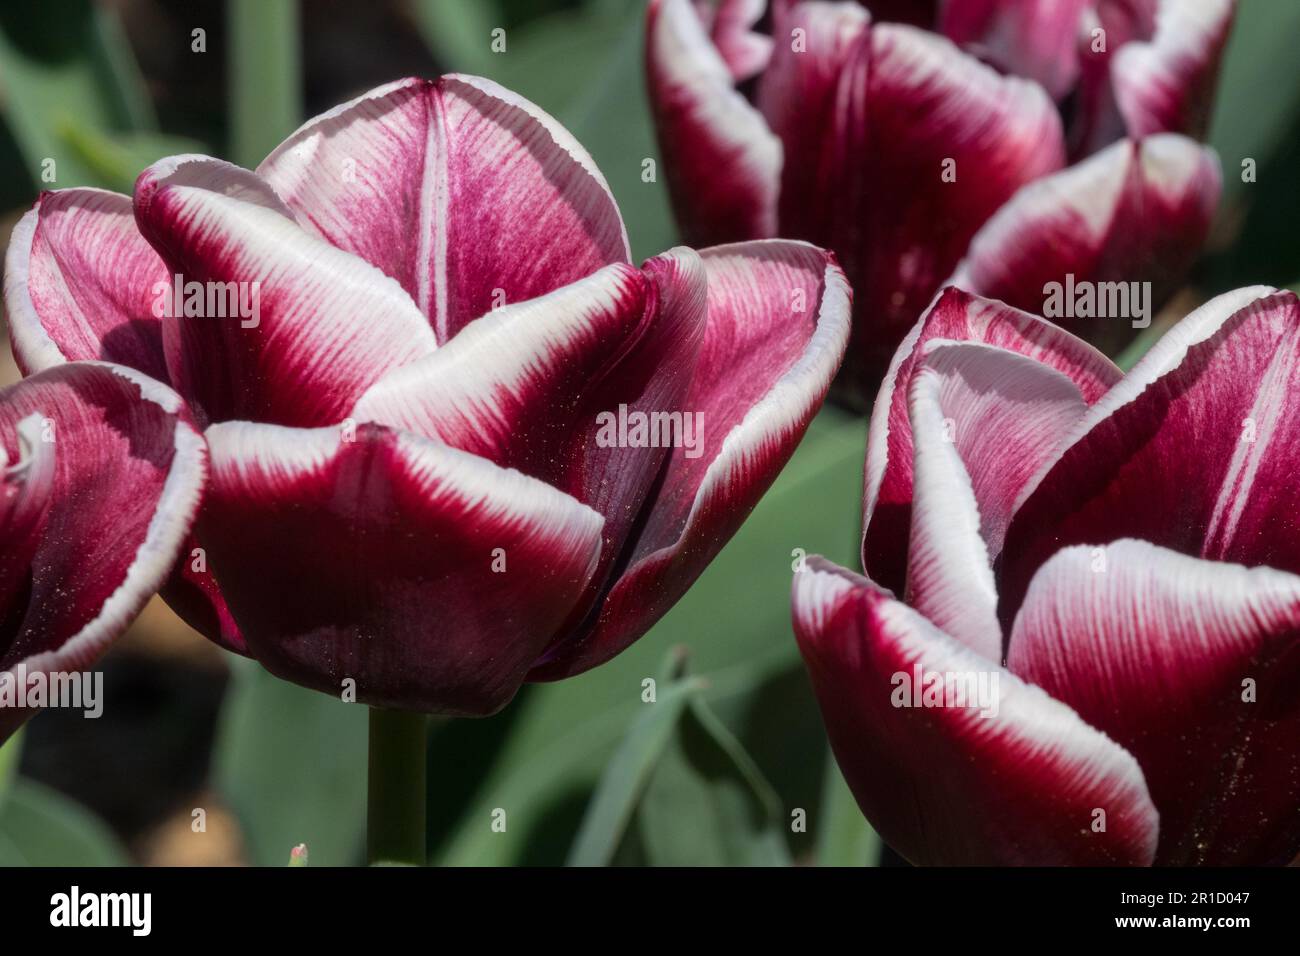 Tulipa "Arabian mistero' Foto Stock